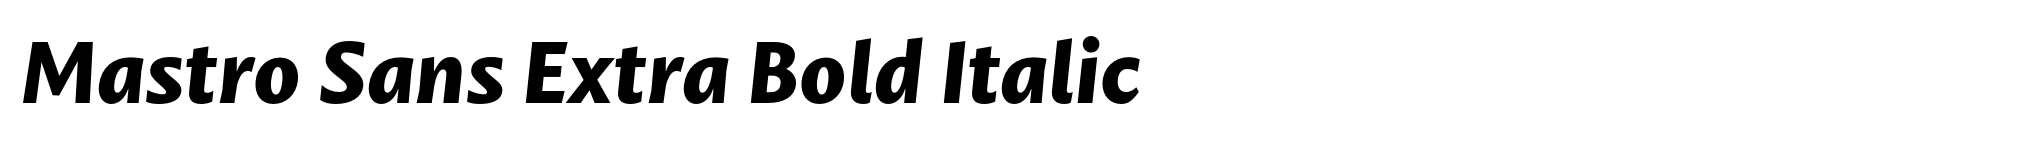 Mastro Sans Extra Bold Italic image